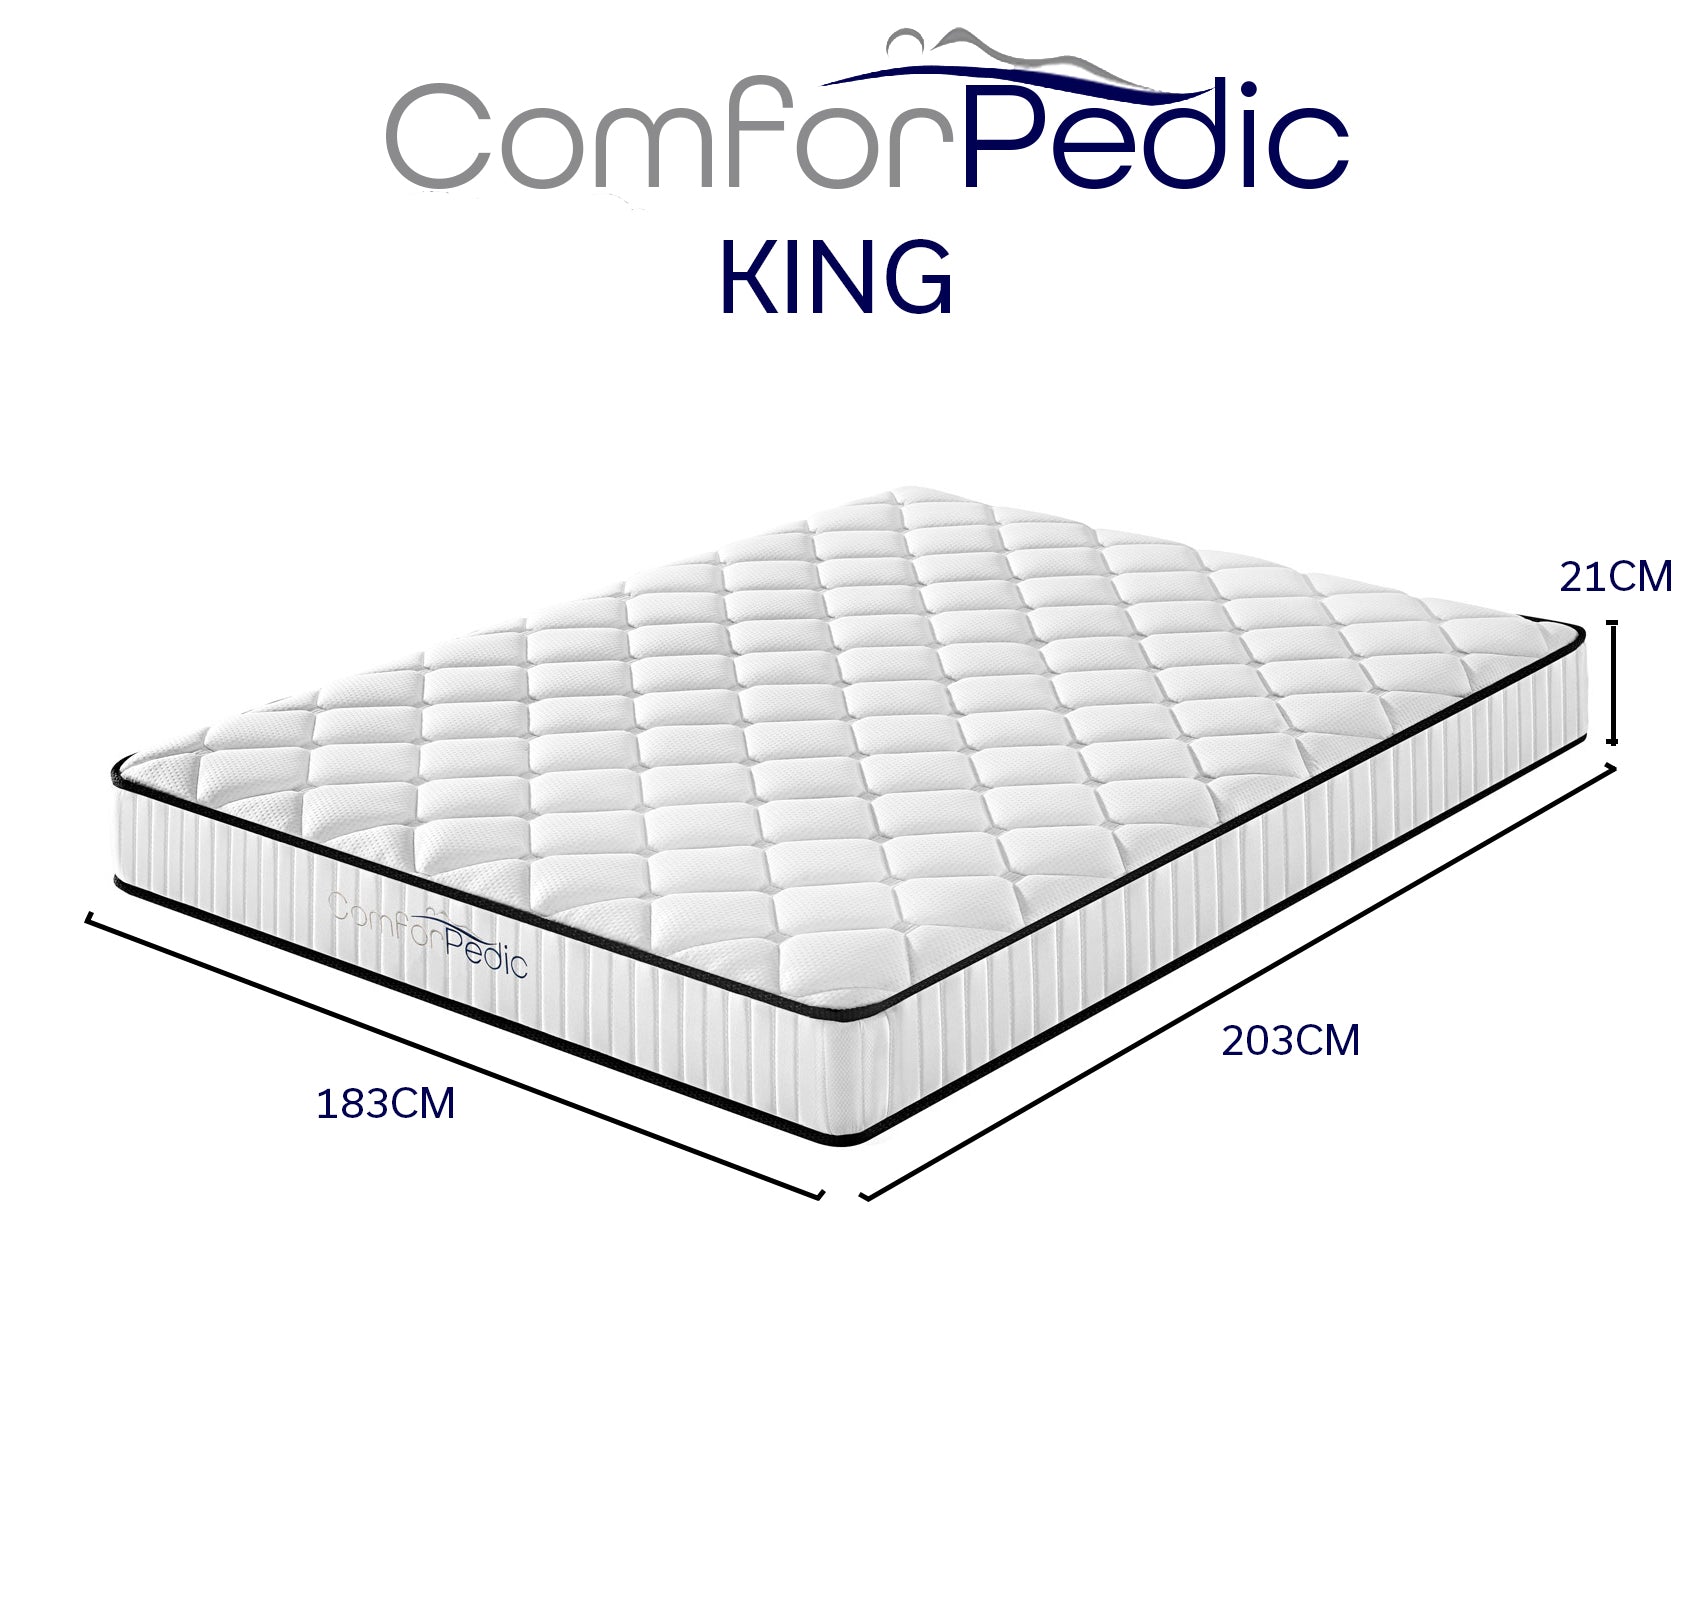 Royal Comfort Comforpedic Bonnell Spring Mattress - King